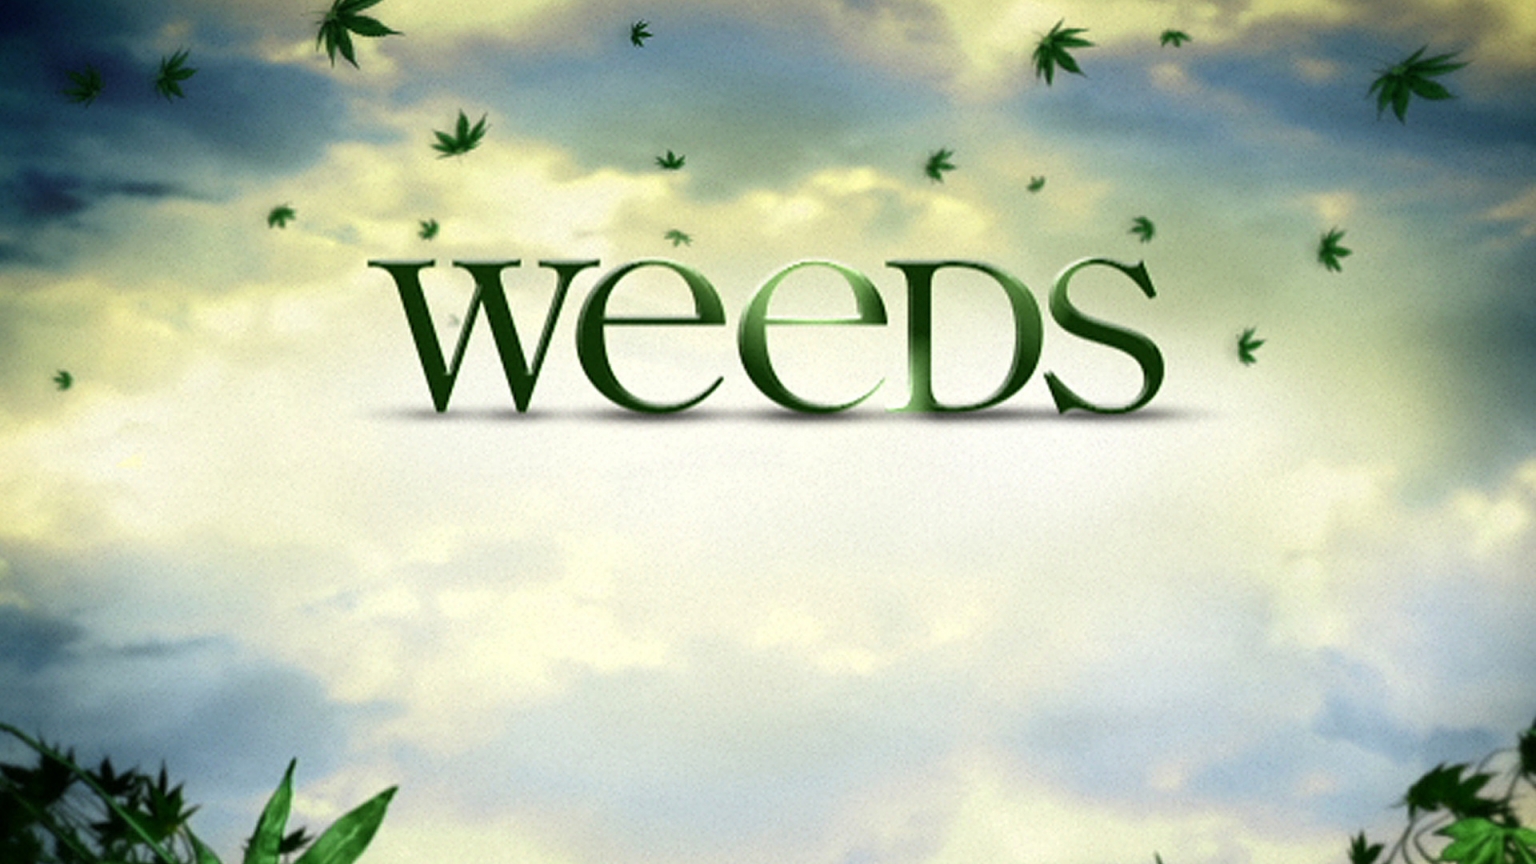 Weeds Logo for 1536 x 864 HDTV resolution